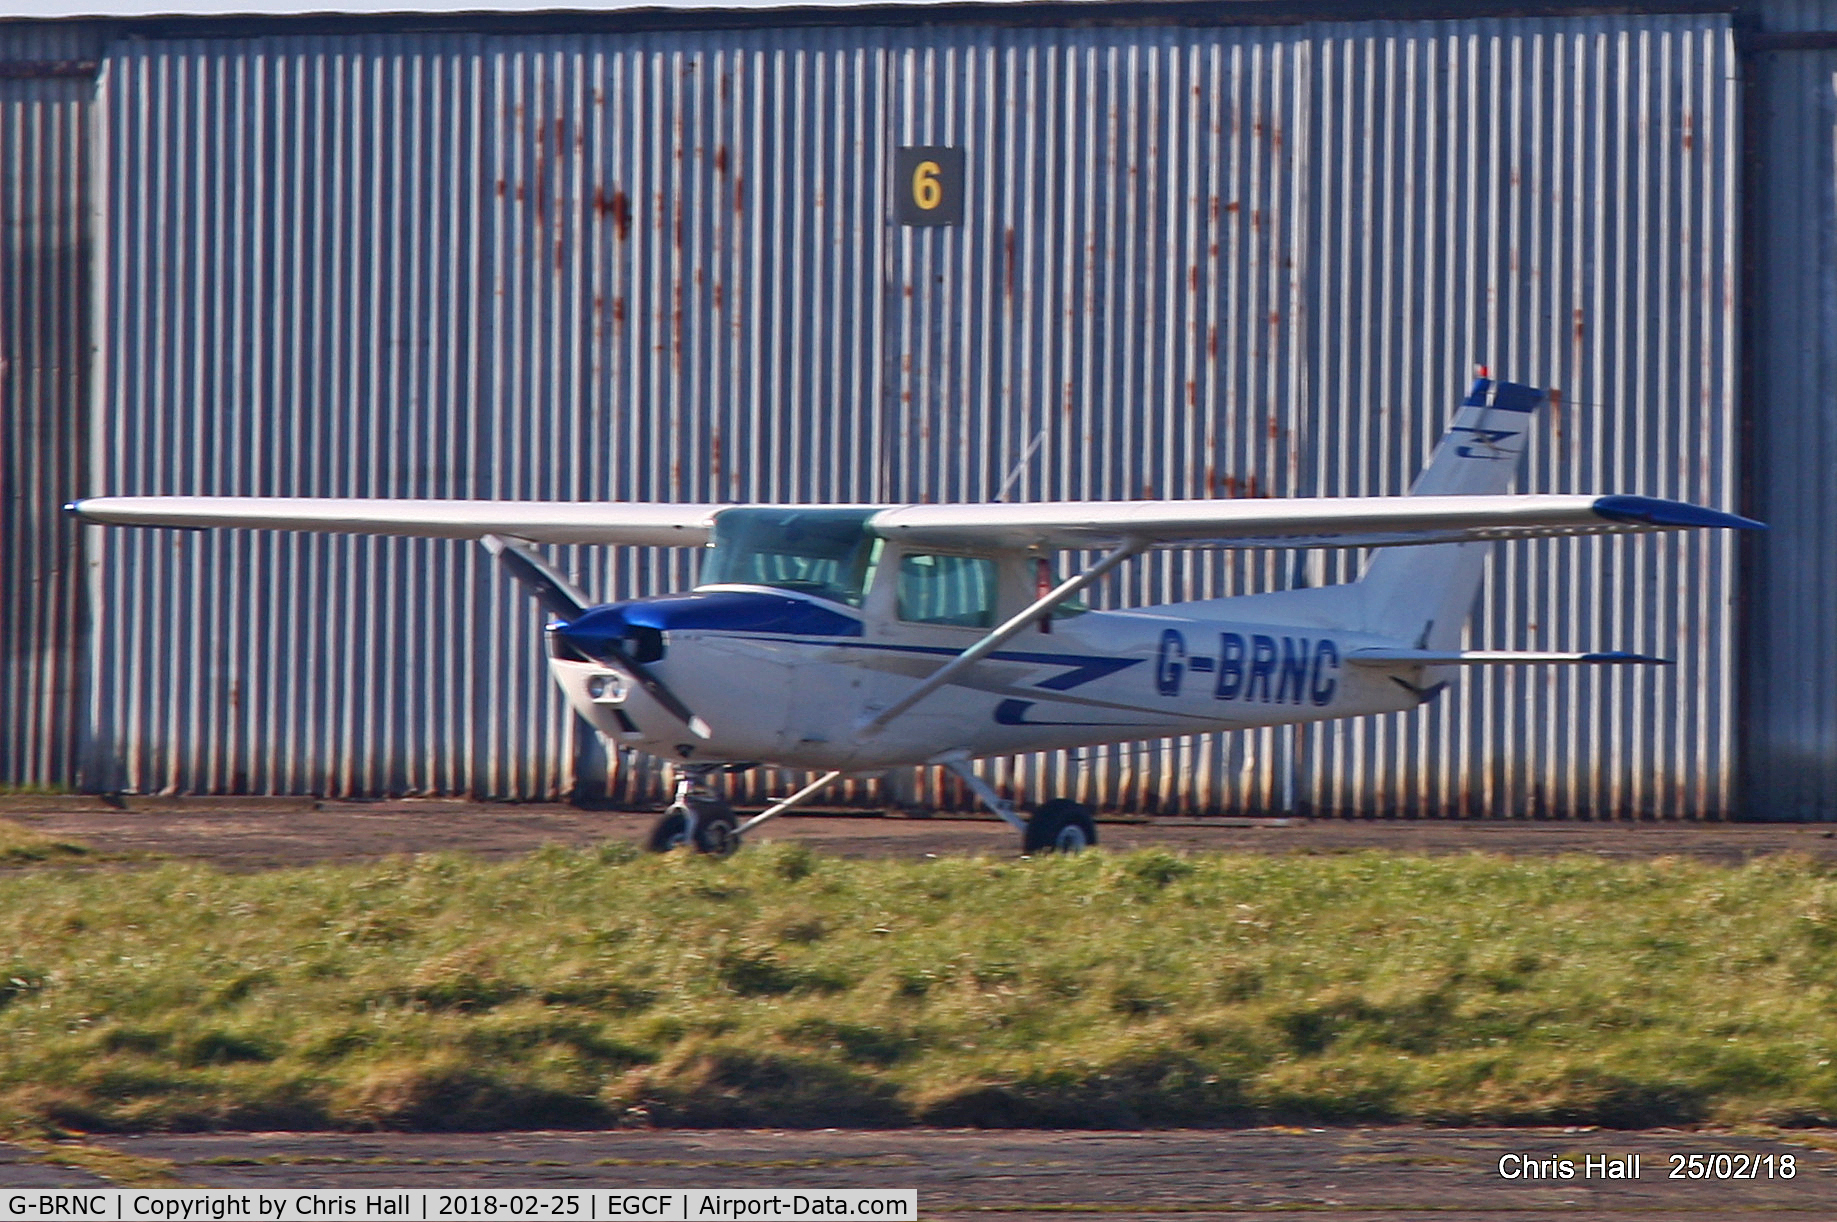 G-BRNC, 1976 Cessna 150M C/N 150-78833, at Sandtoft